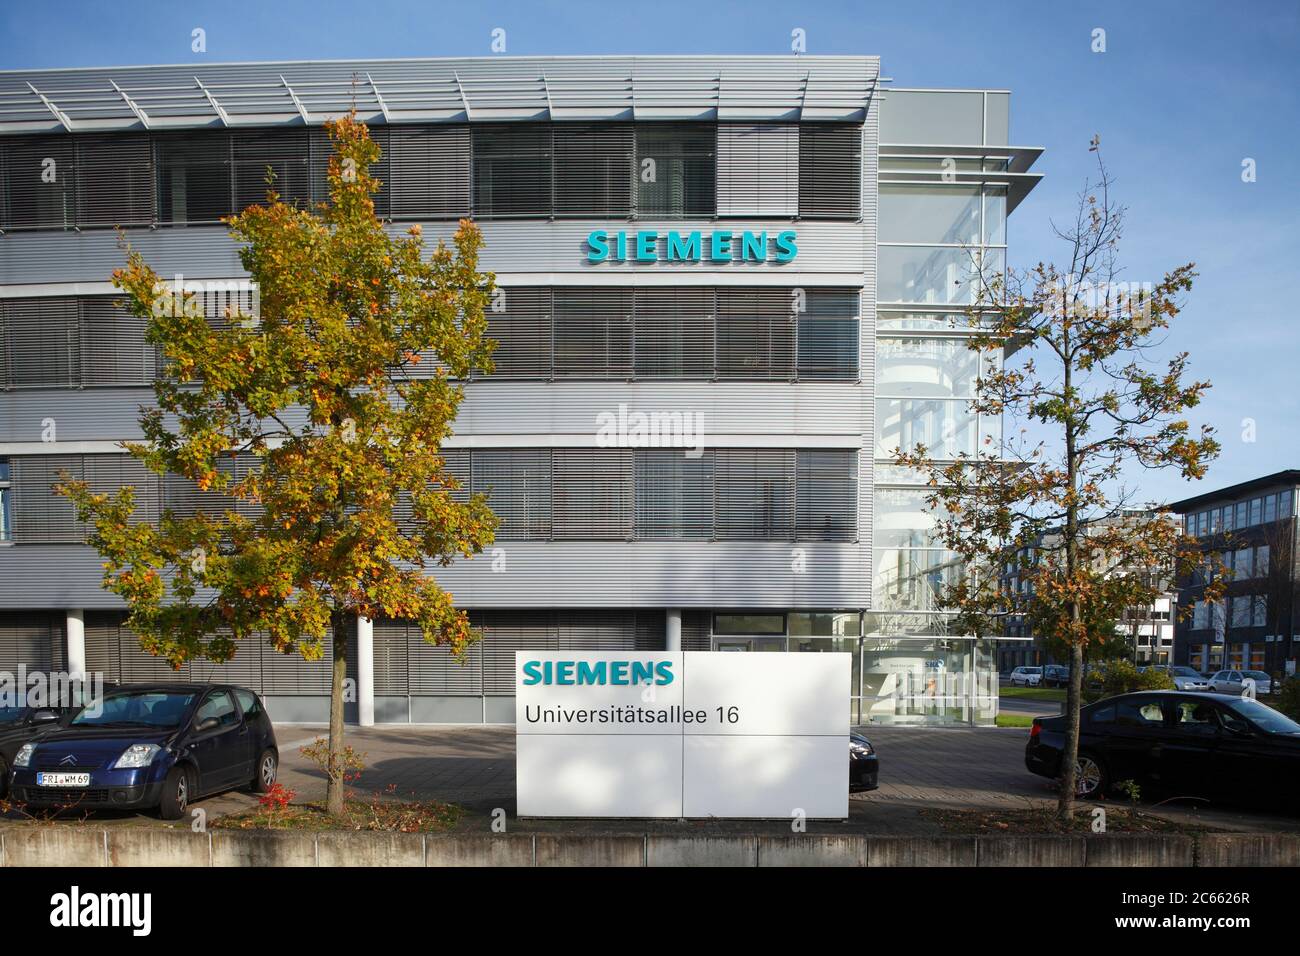 Siemens Building, Technology Center, Technology Park, Bremen, Germany, Europe Stock Photo